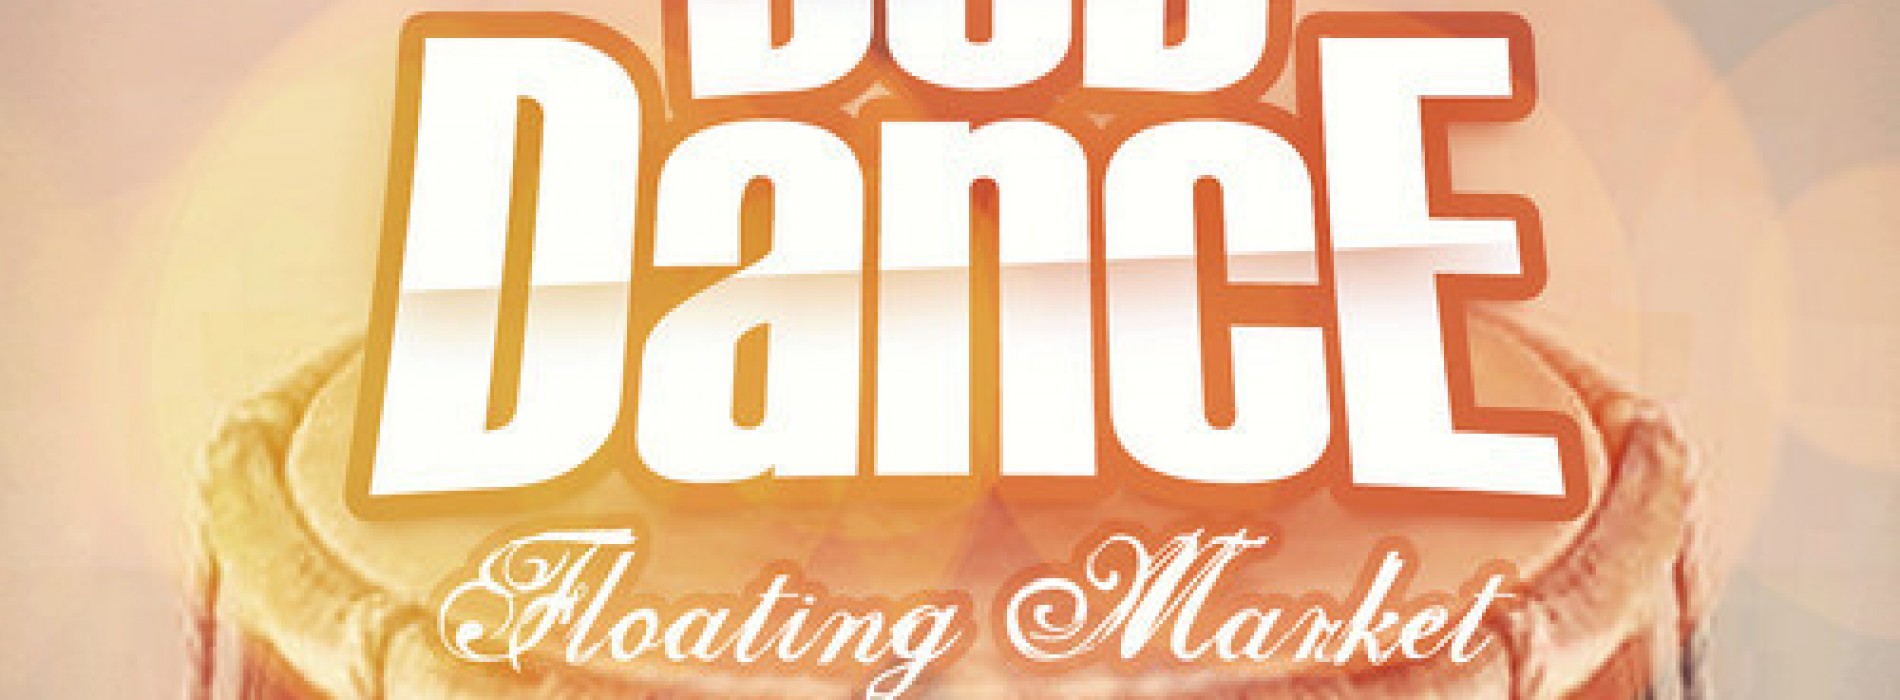 Hemaka Wijeratne – ‘DUB Dance’ [Floating Market]